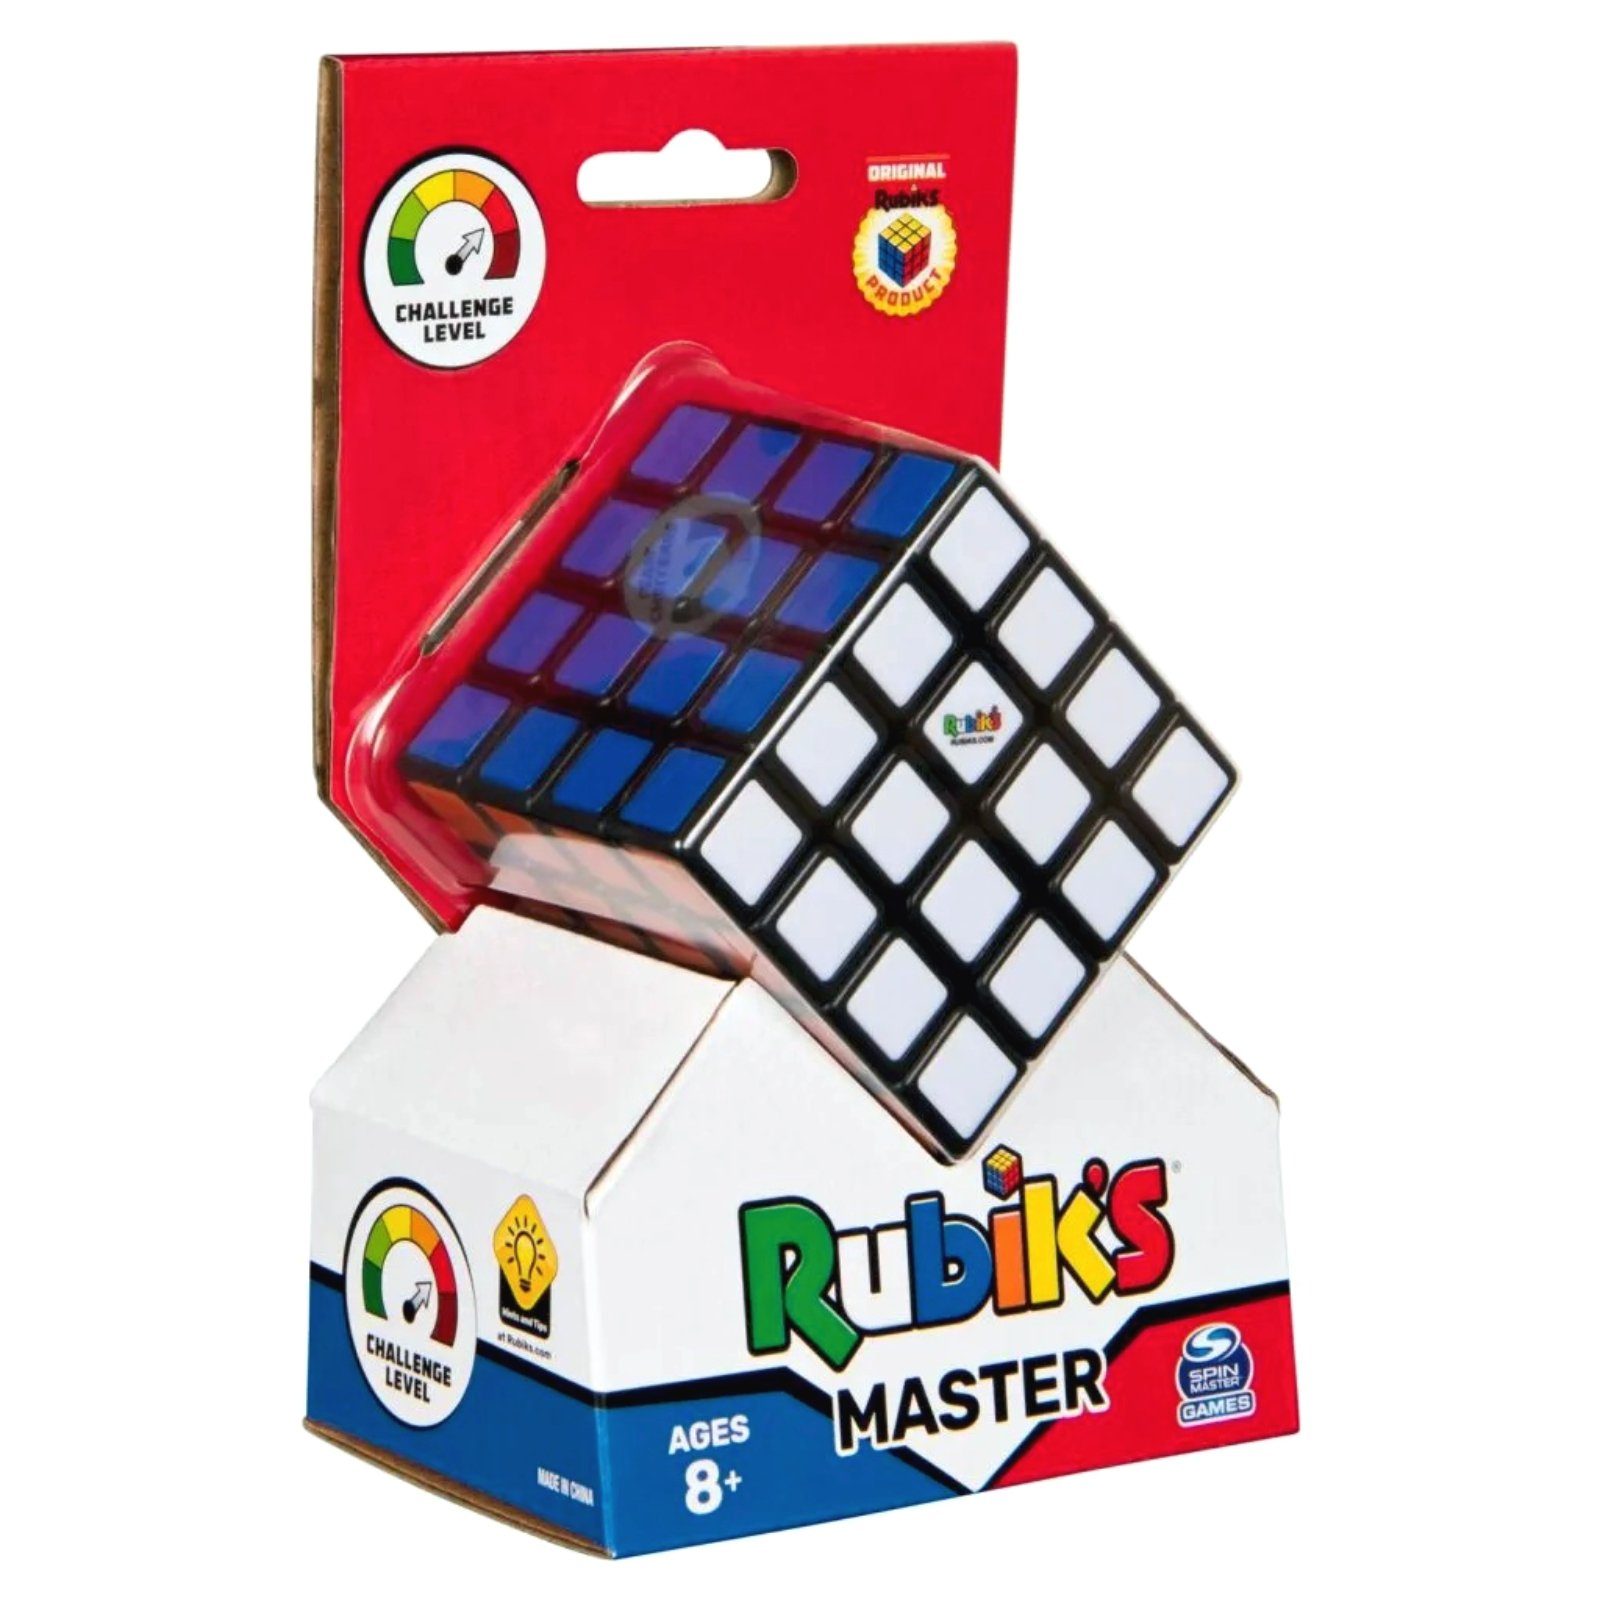 Spinmaster 3D-Puzzle Original Rubik´s Revenge MASTER 4 x 4 Cube Zauberwürfel, Puzzleteile